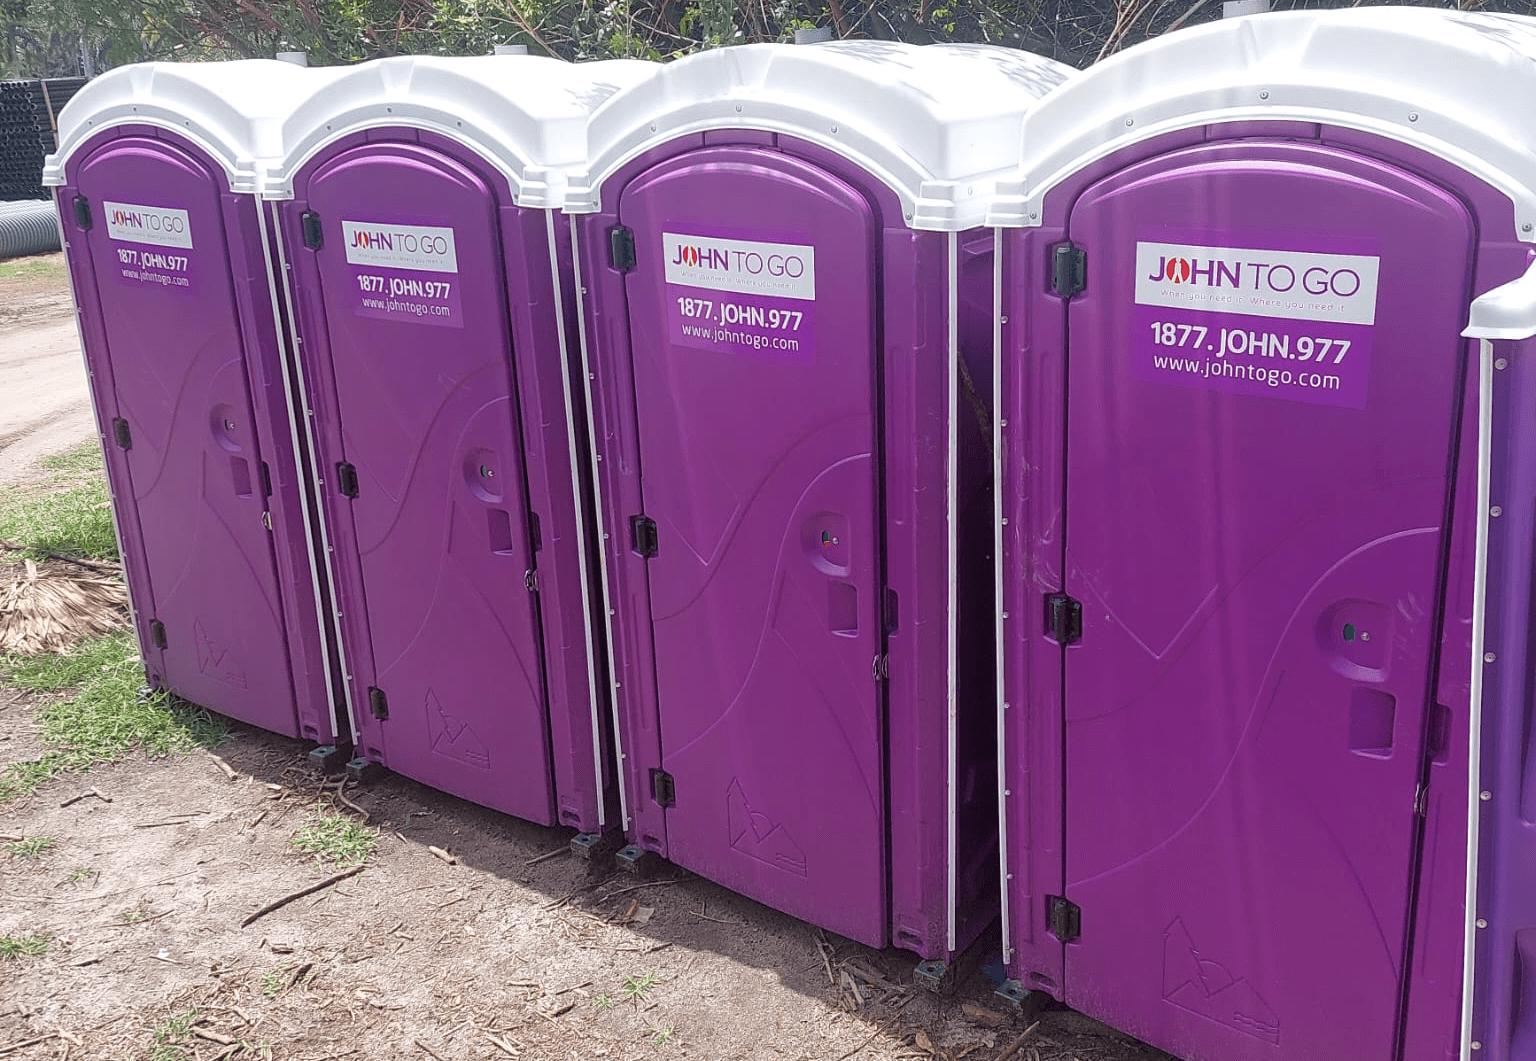 Portable toilet rental units